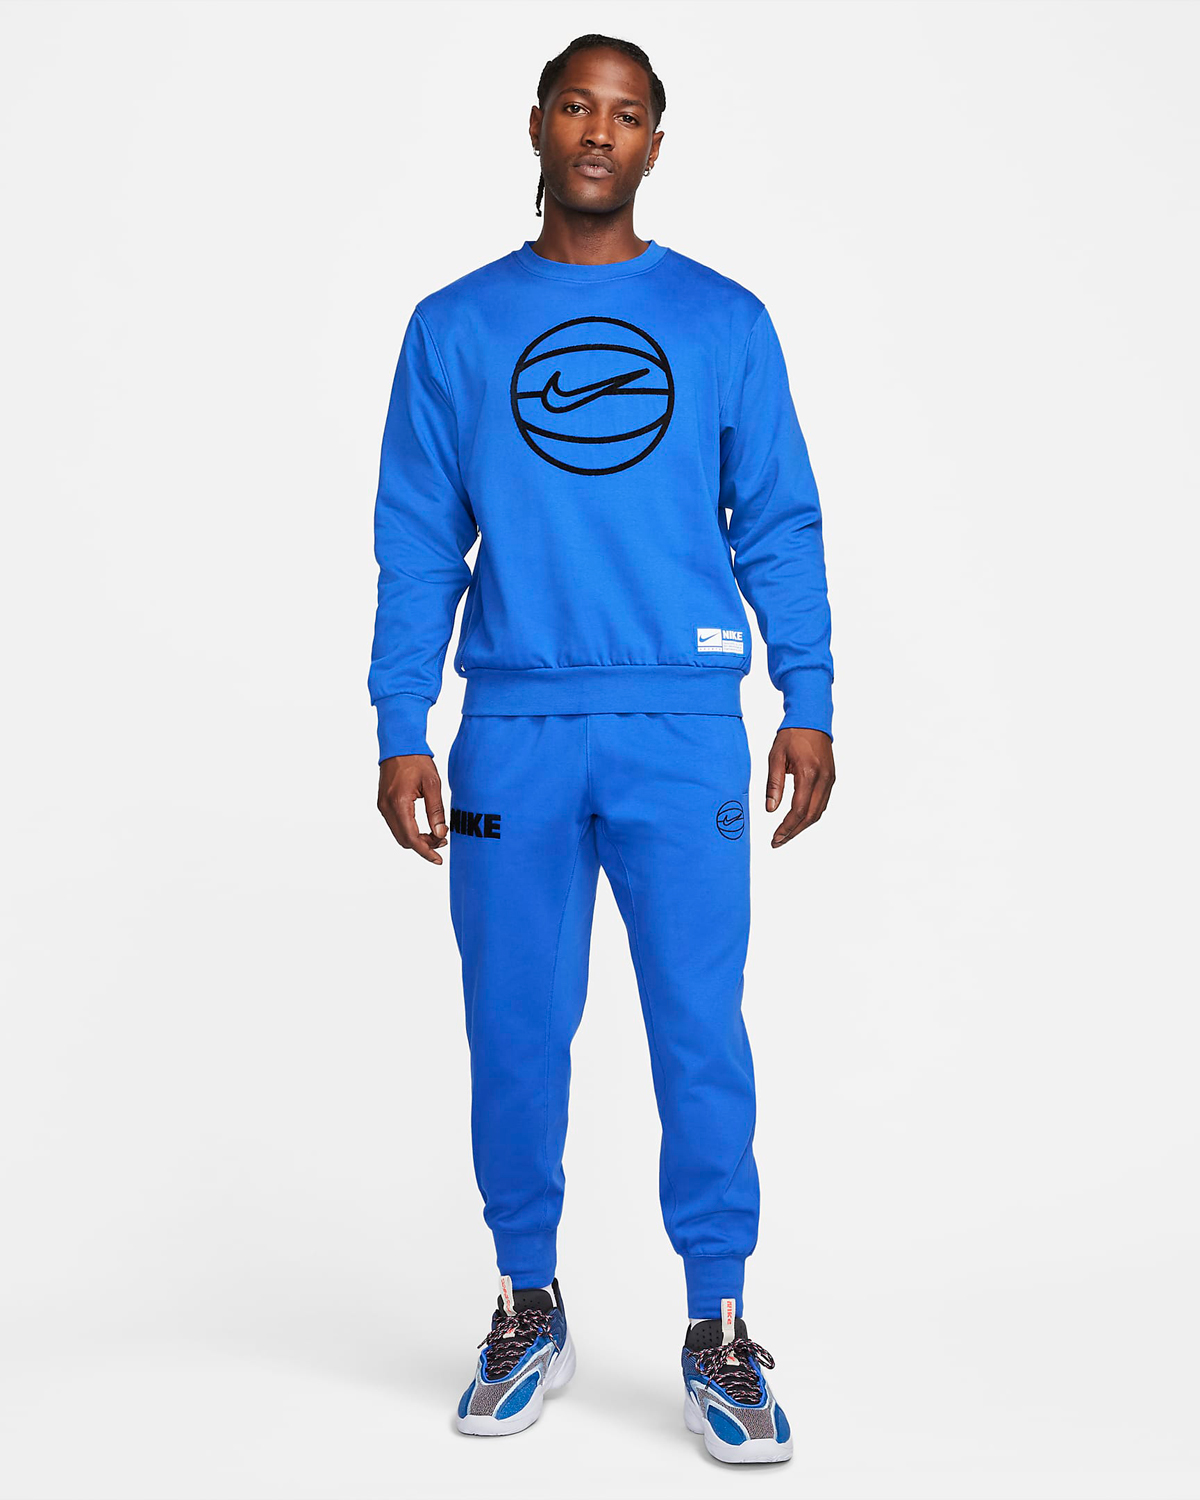 Nike-Standard-Issue-Basketball-Sweatshirt-Pants-Game-Royal